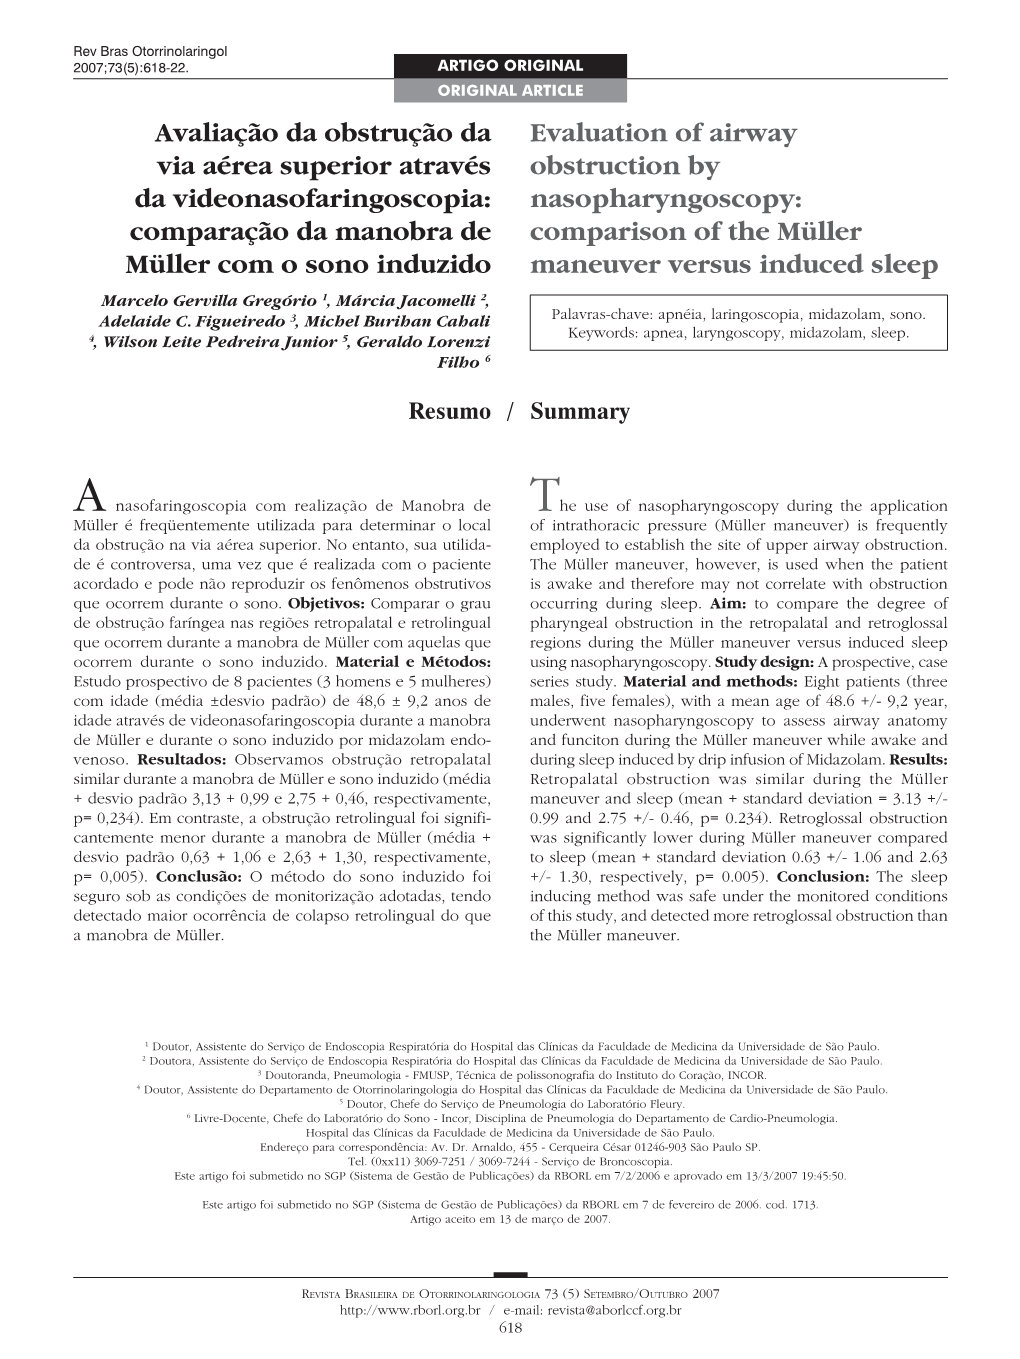 Evaluation of Airway Obstruction by Nasopharyngoscopy